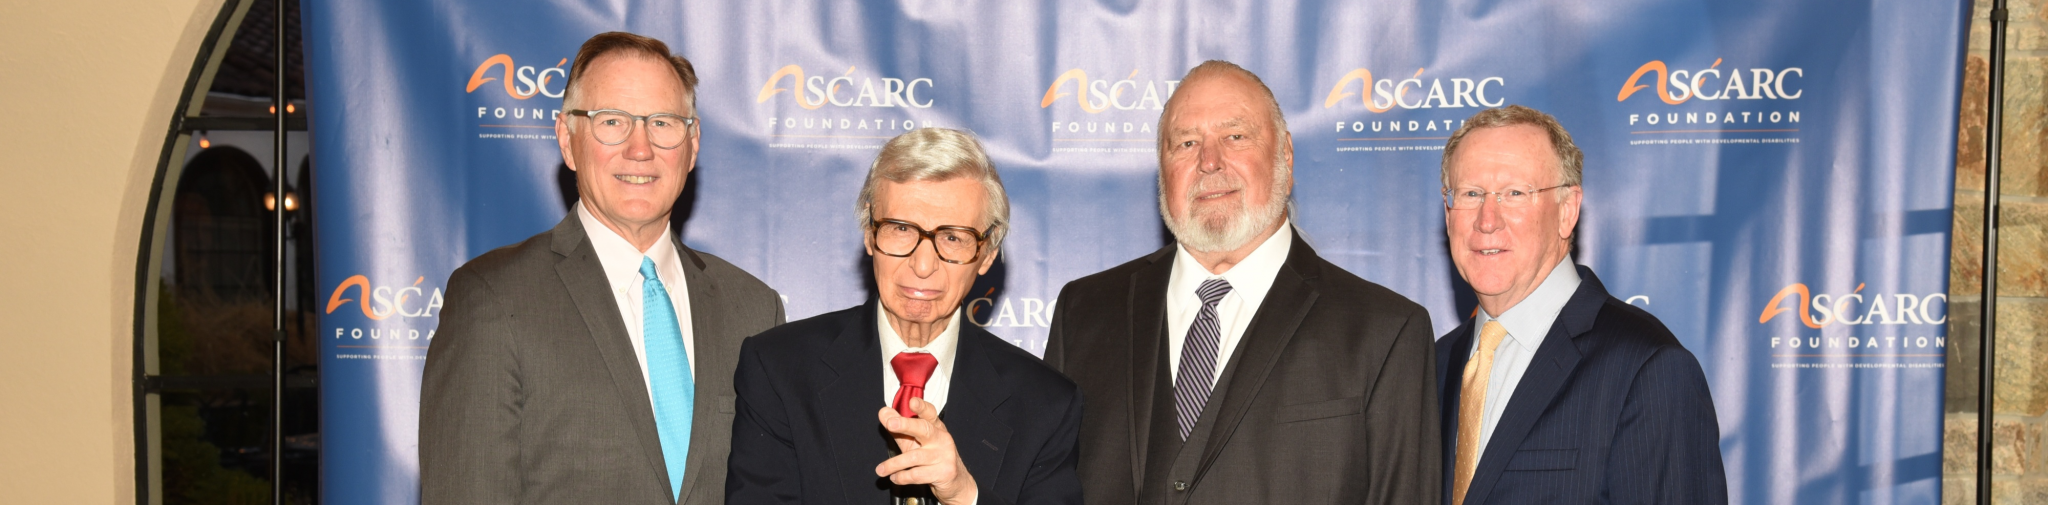 SCARC Foundation Honors Leadership Awards